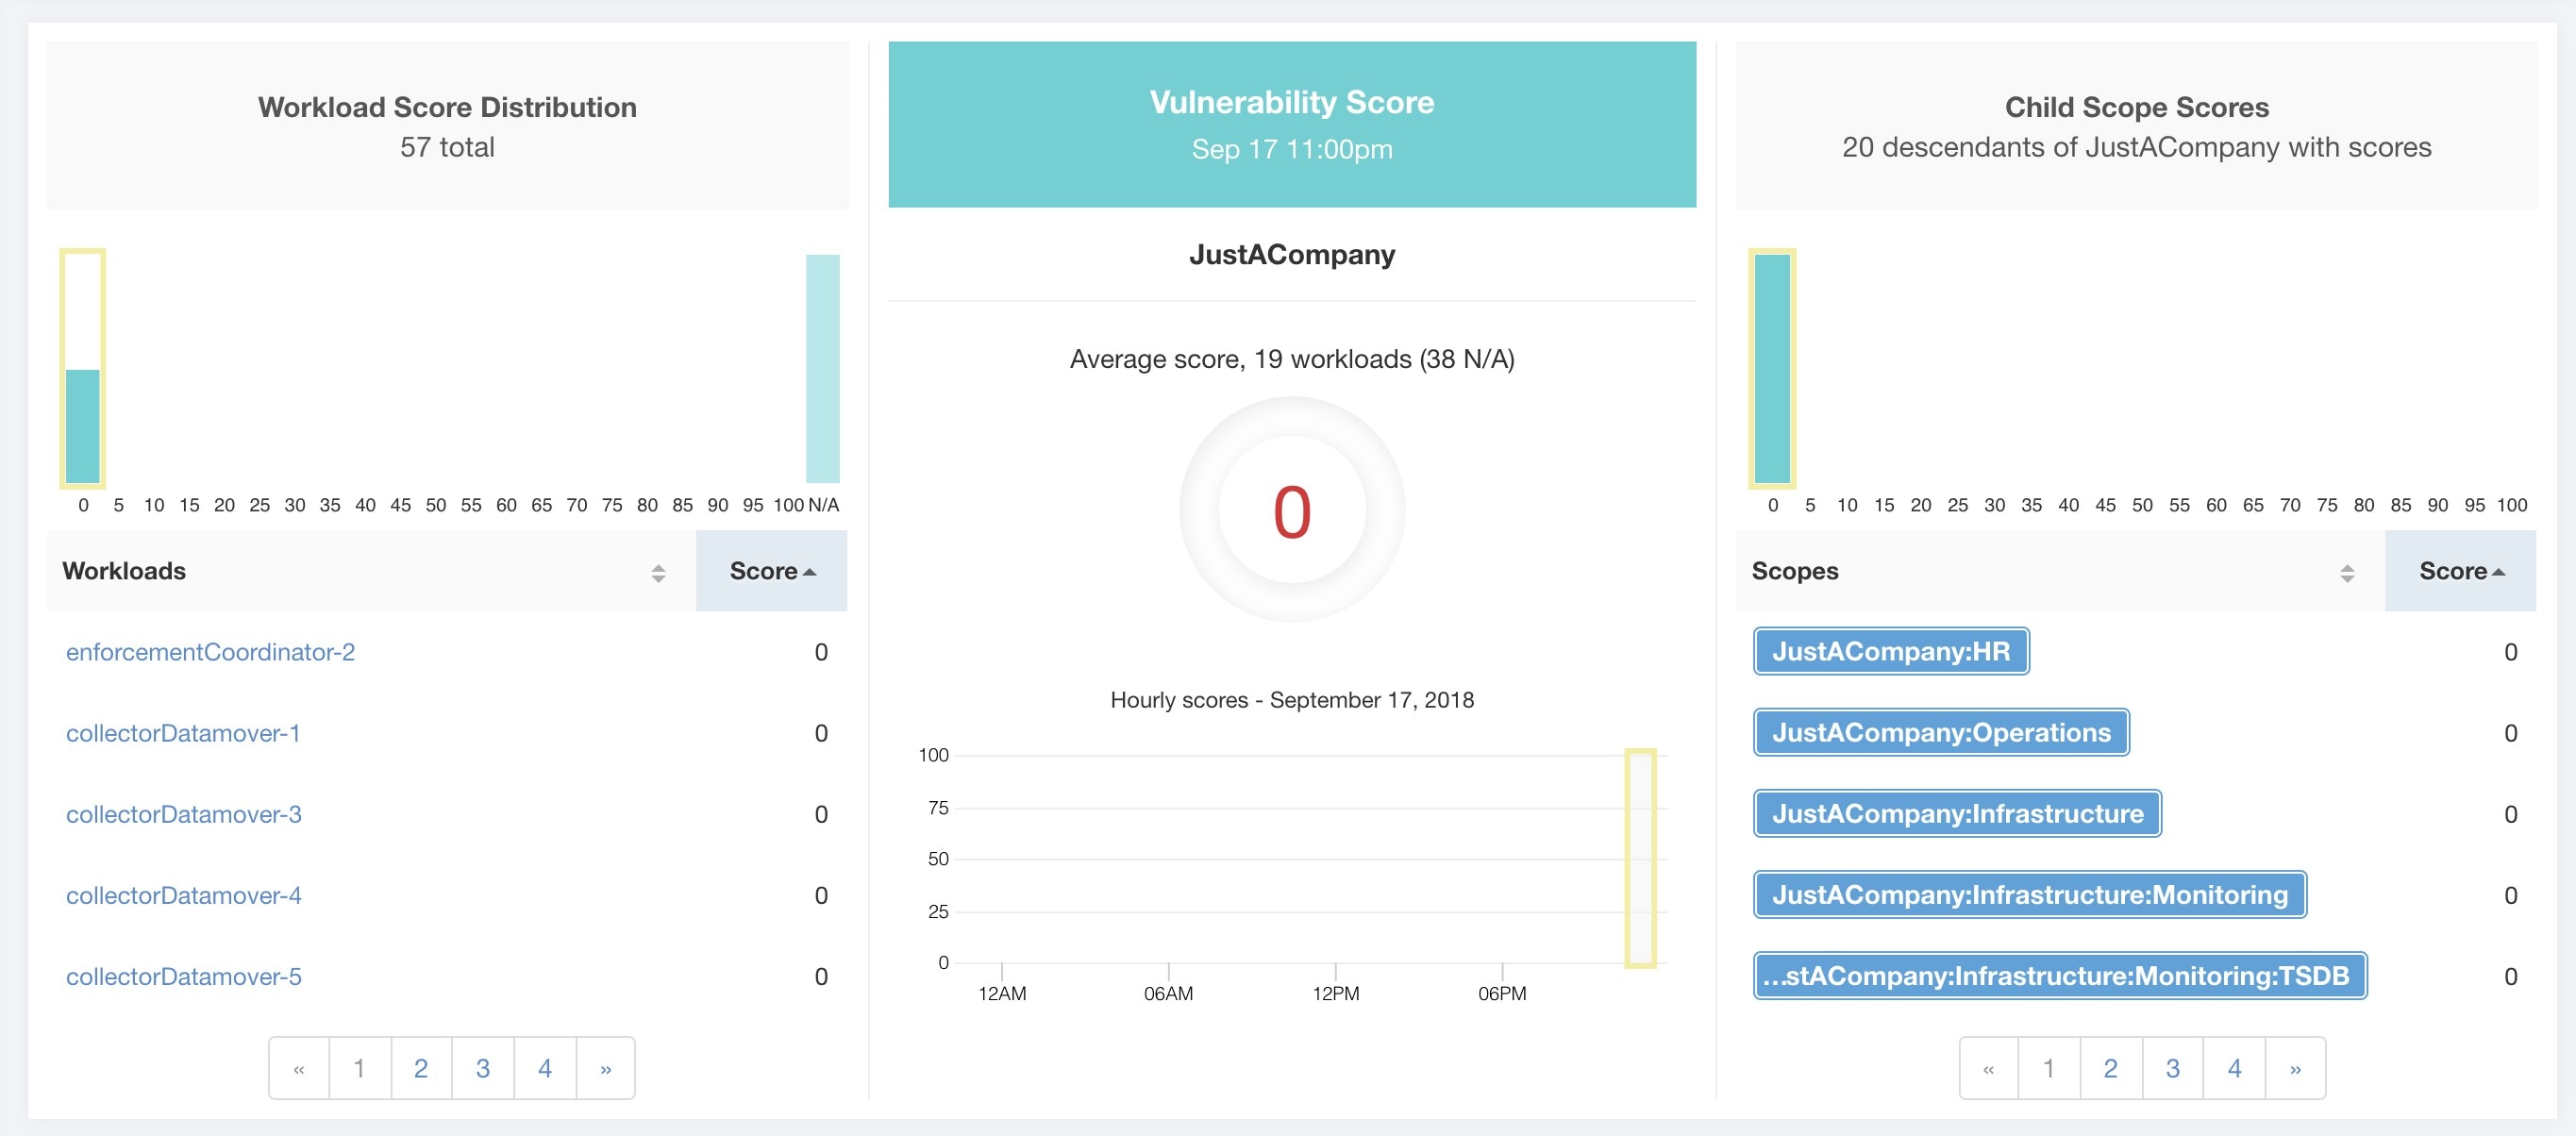 Vulnerability Security Score Details